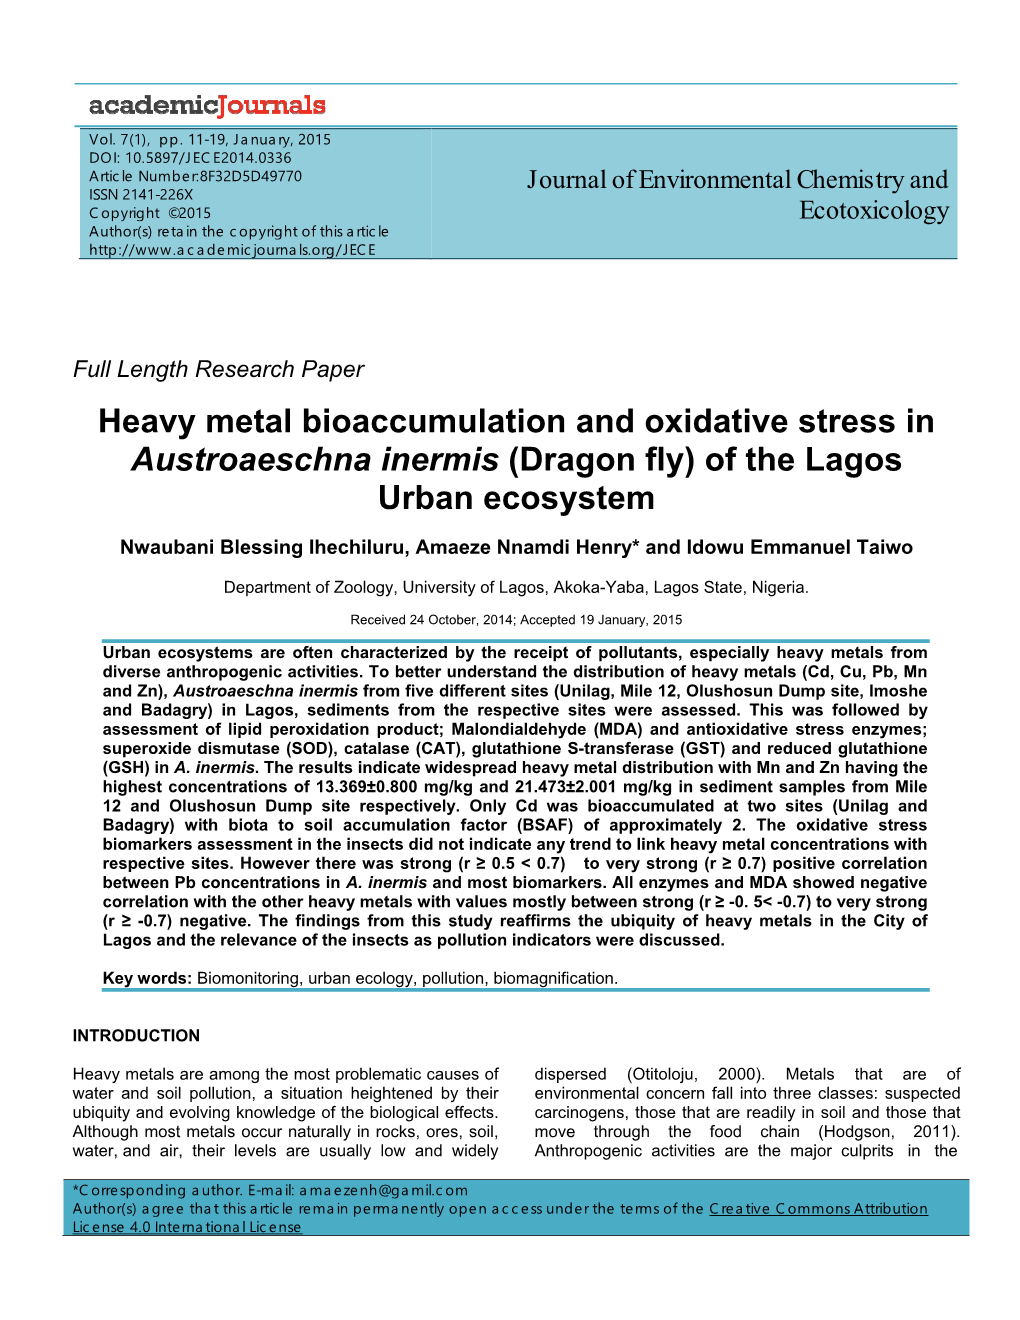 Heavy Metal Bioaccumulation and Oxidative Stress in Austroaeschna Inermis (Dragon Fly) of the Lagos Urban Ecosystem